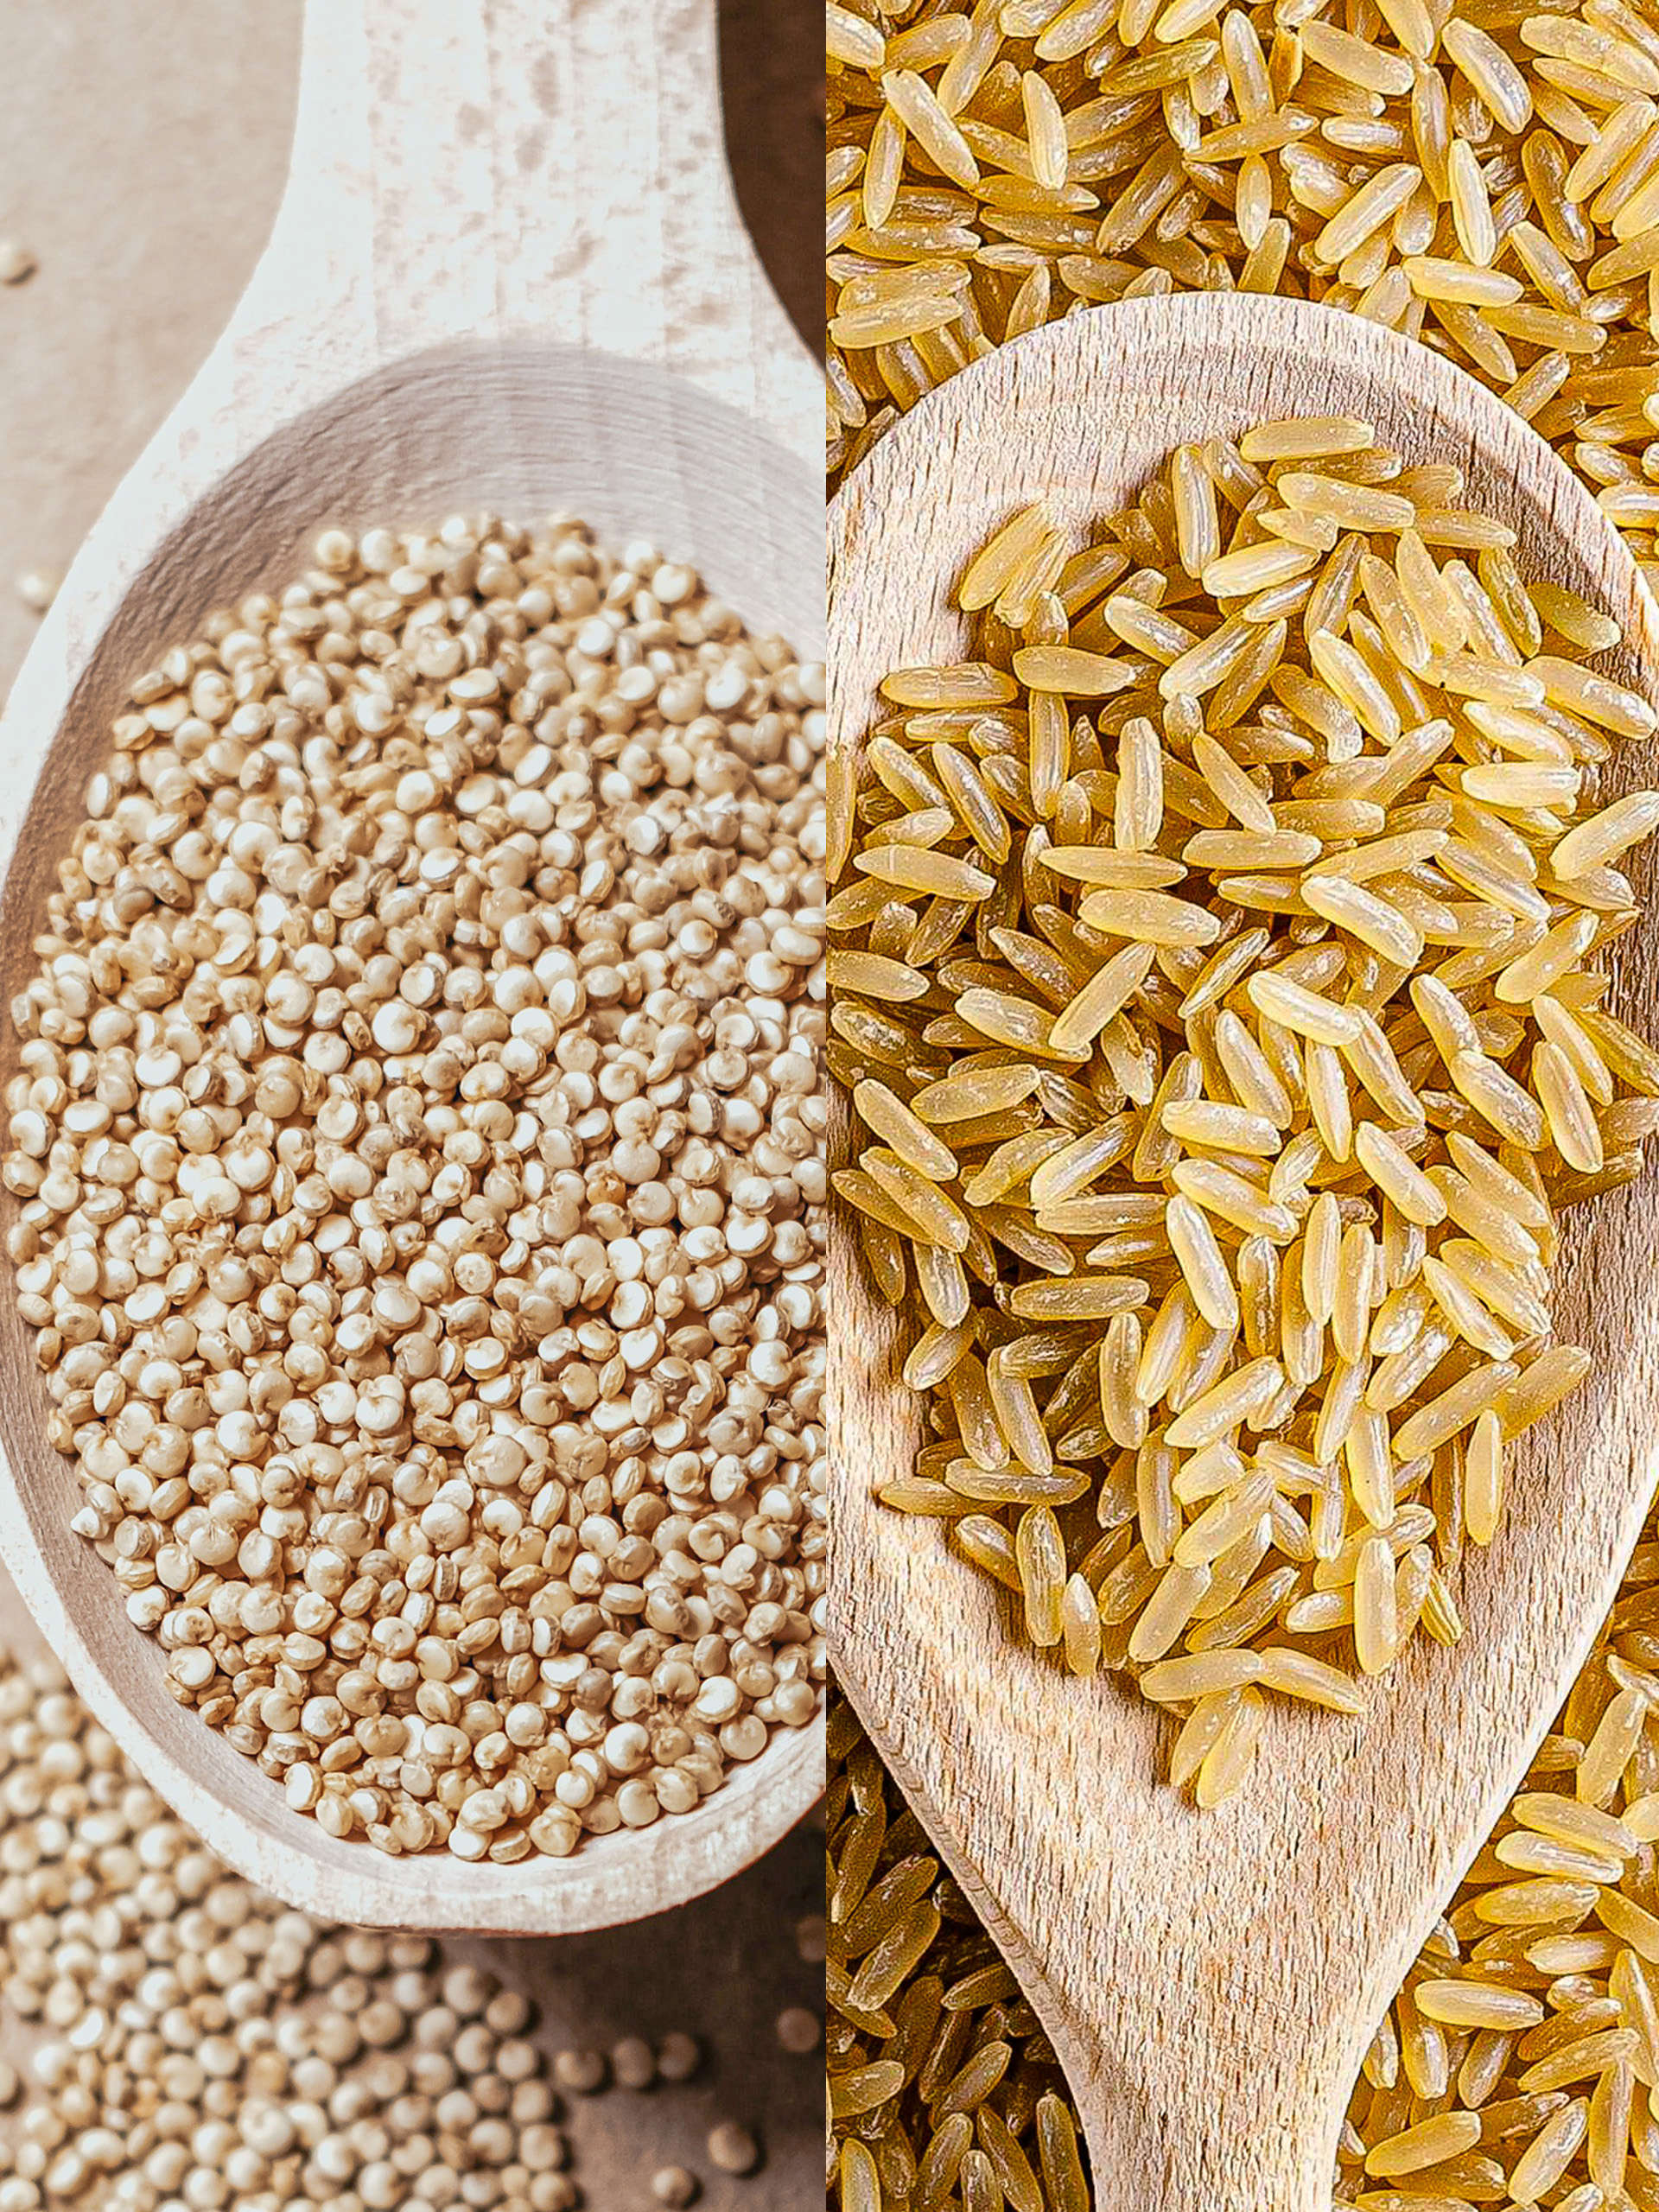 Is Quinoa Healthier Than Rice?